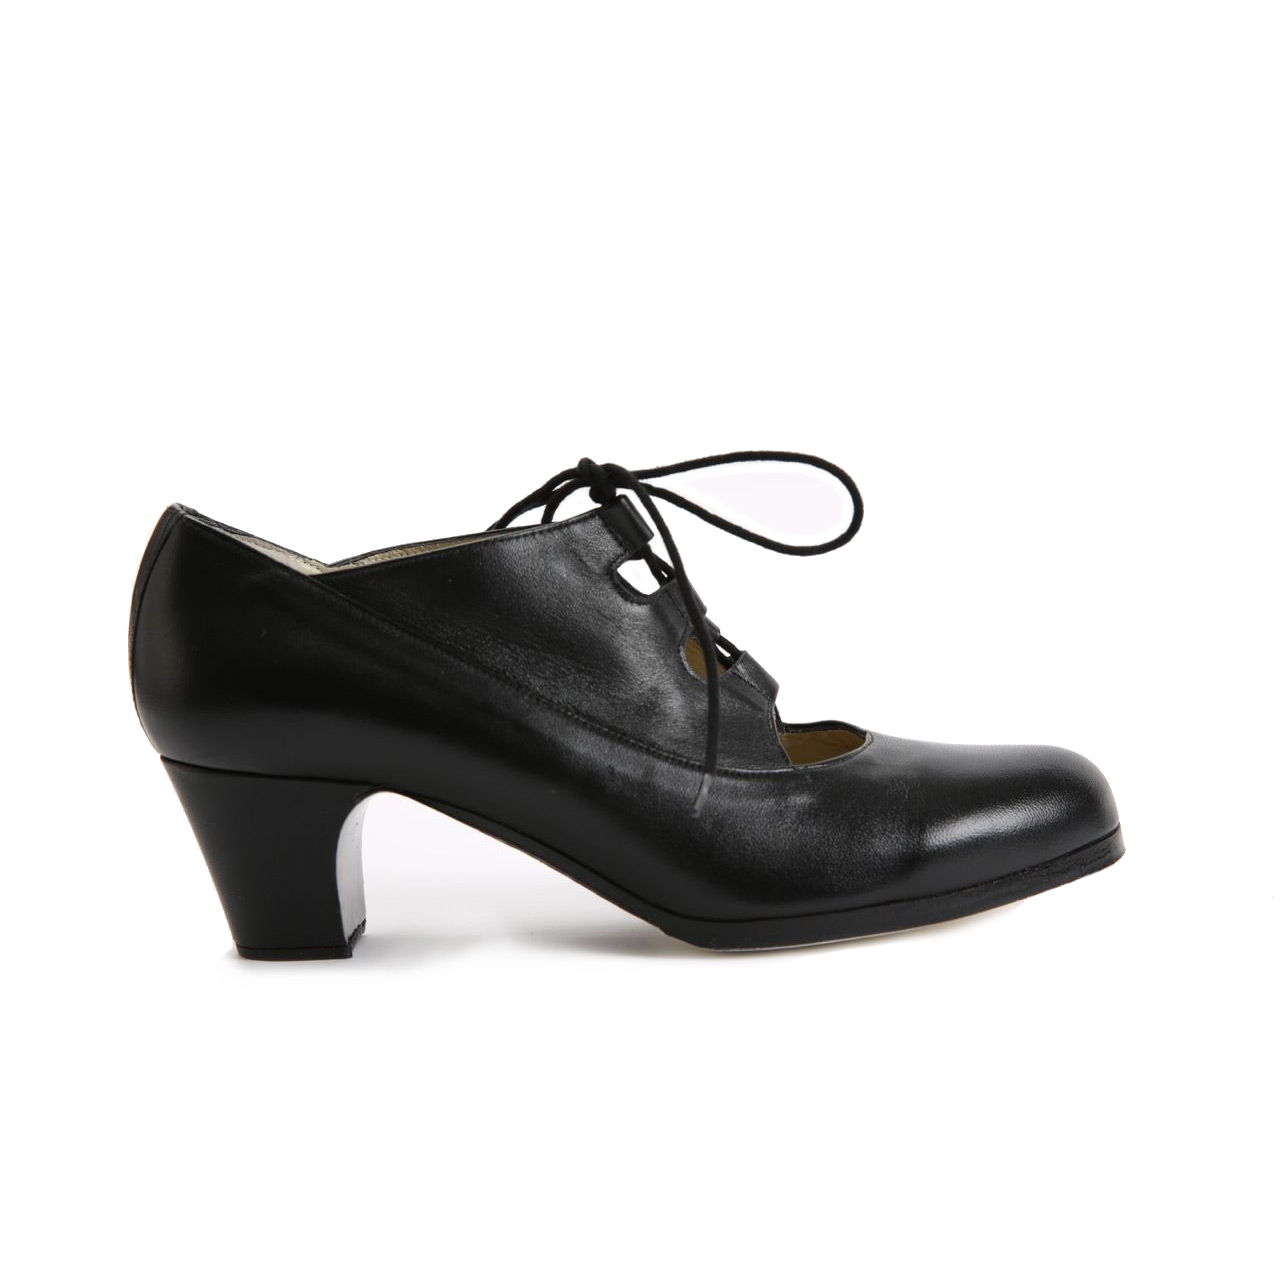 Chaussures Flamenco Antiguo Noir